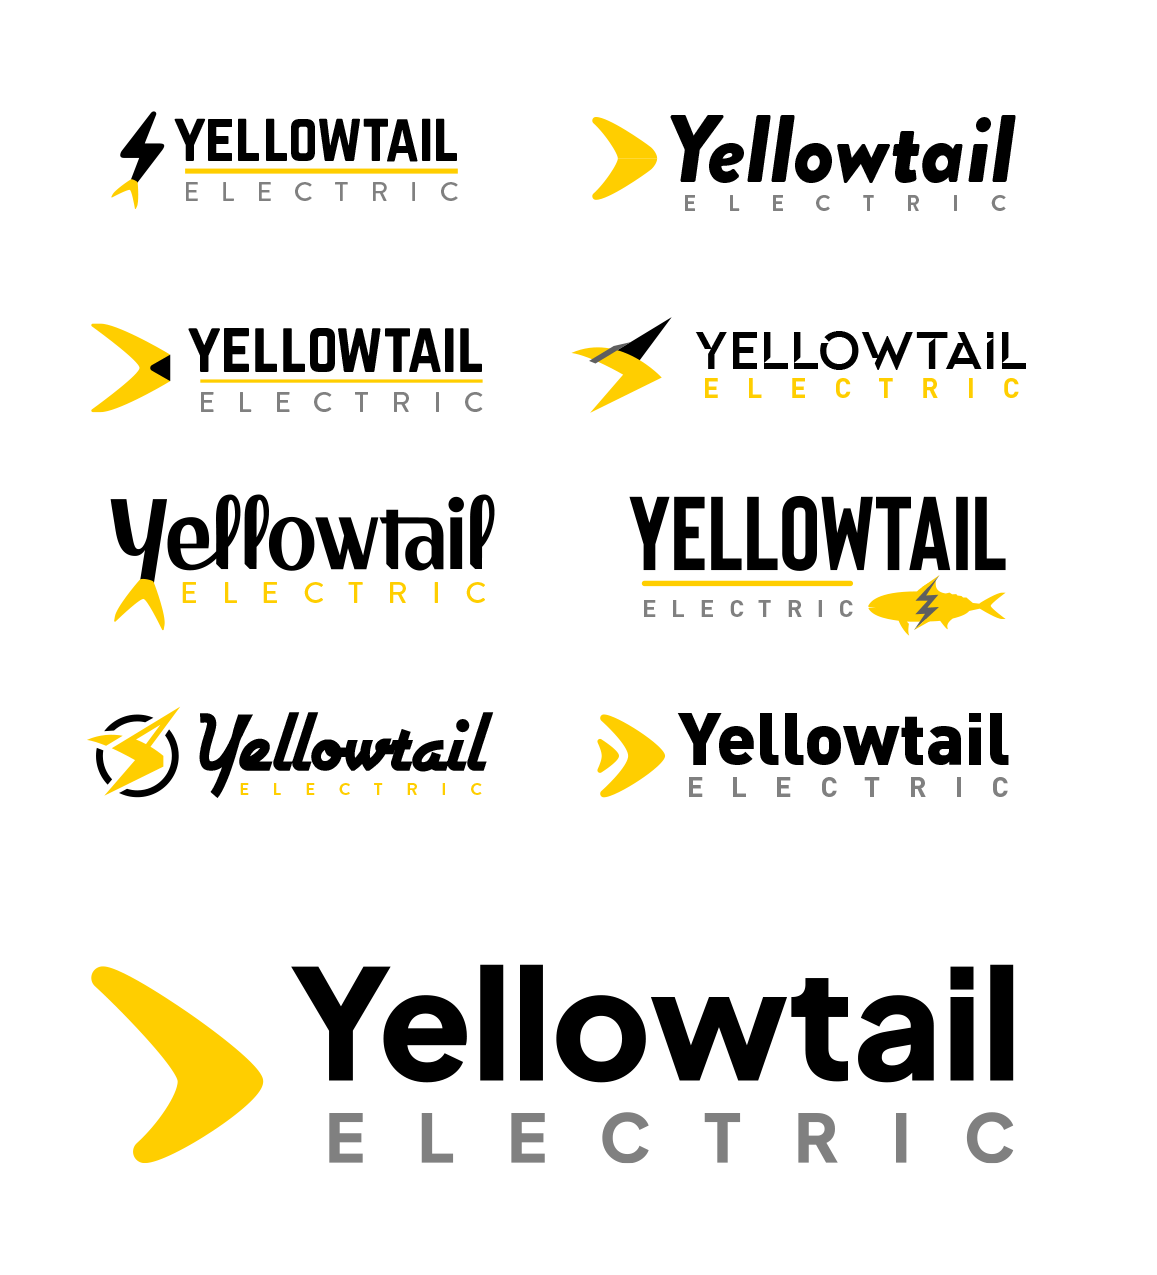 yellowtail logo concepts